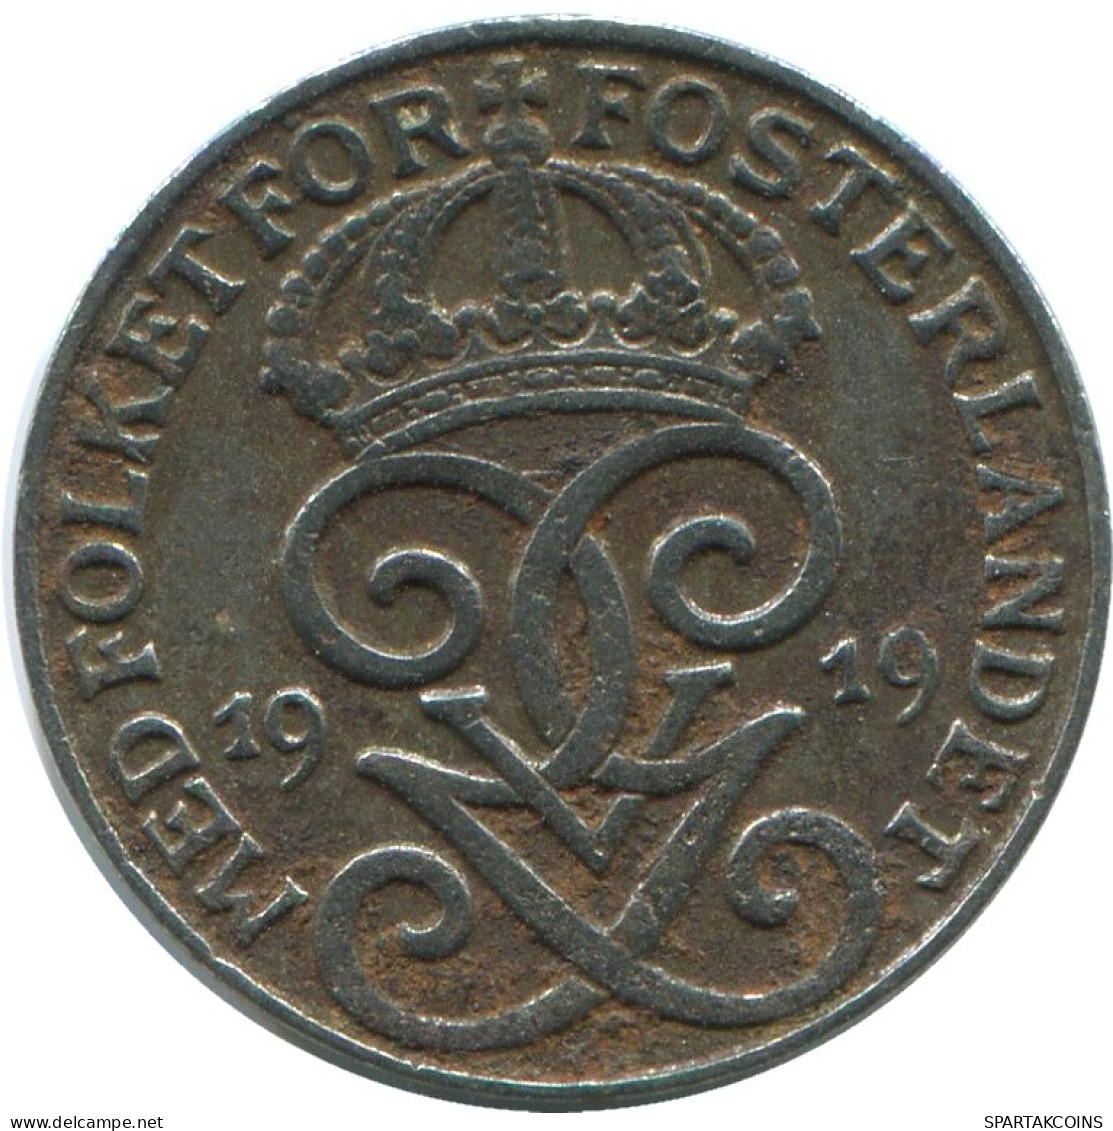 1 ORE 1919 SWEDEN Coin #AD156.2.U.A - Sweden